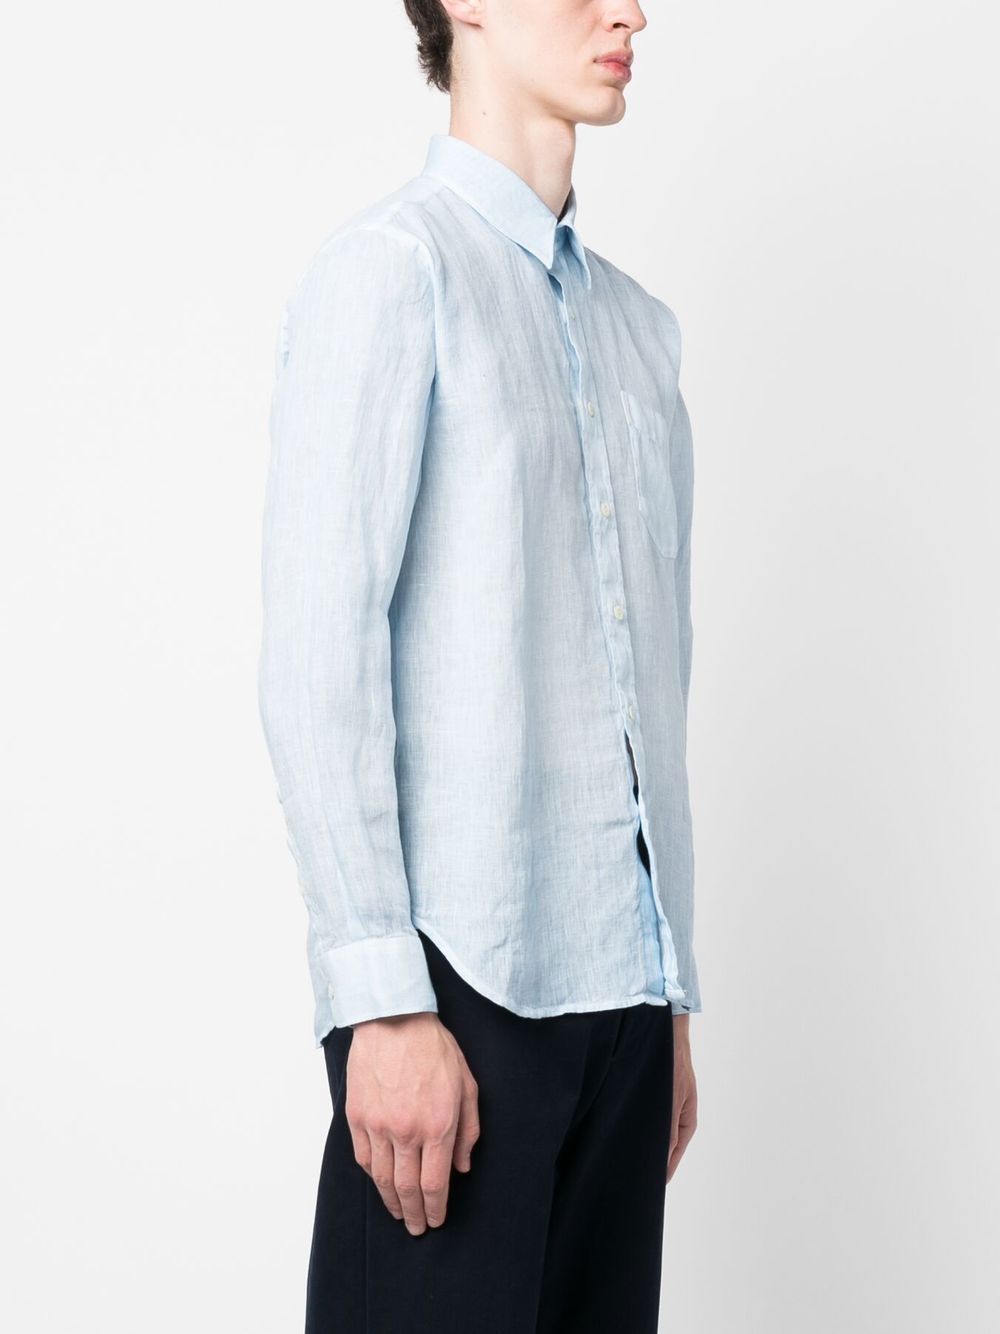 120% LinoLinen Regular fit shirt at Fashion Clinic